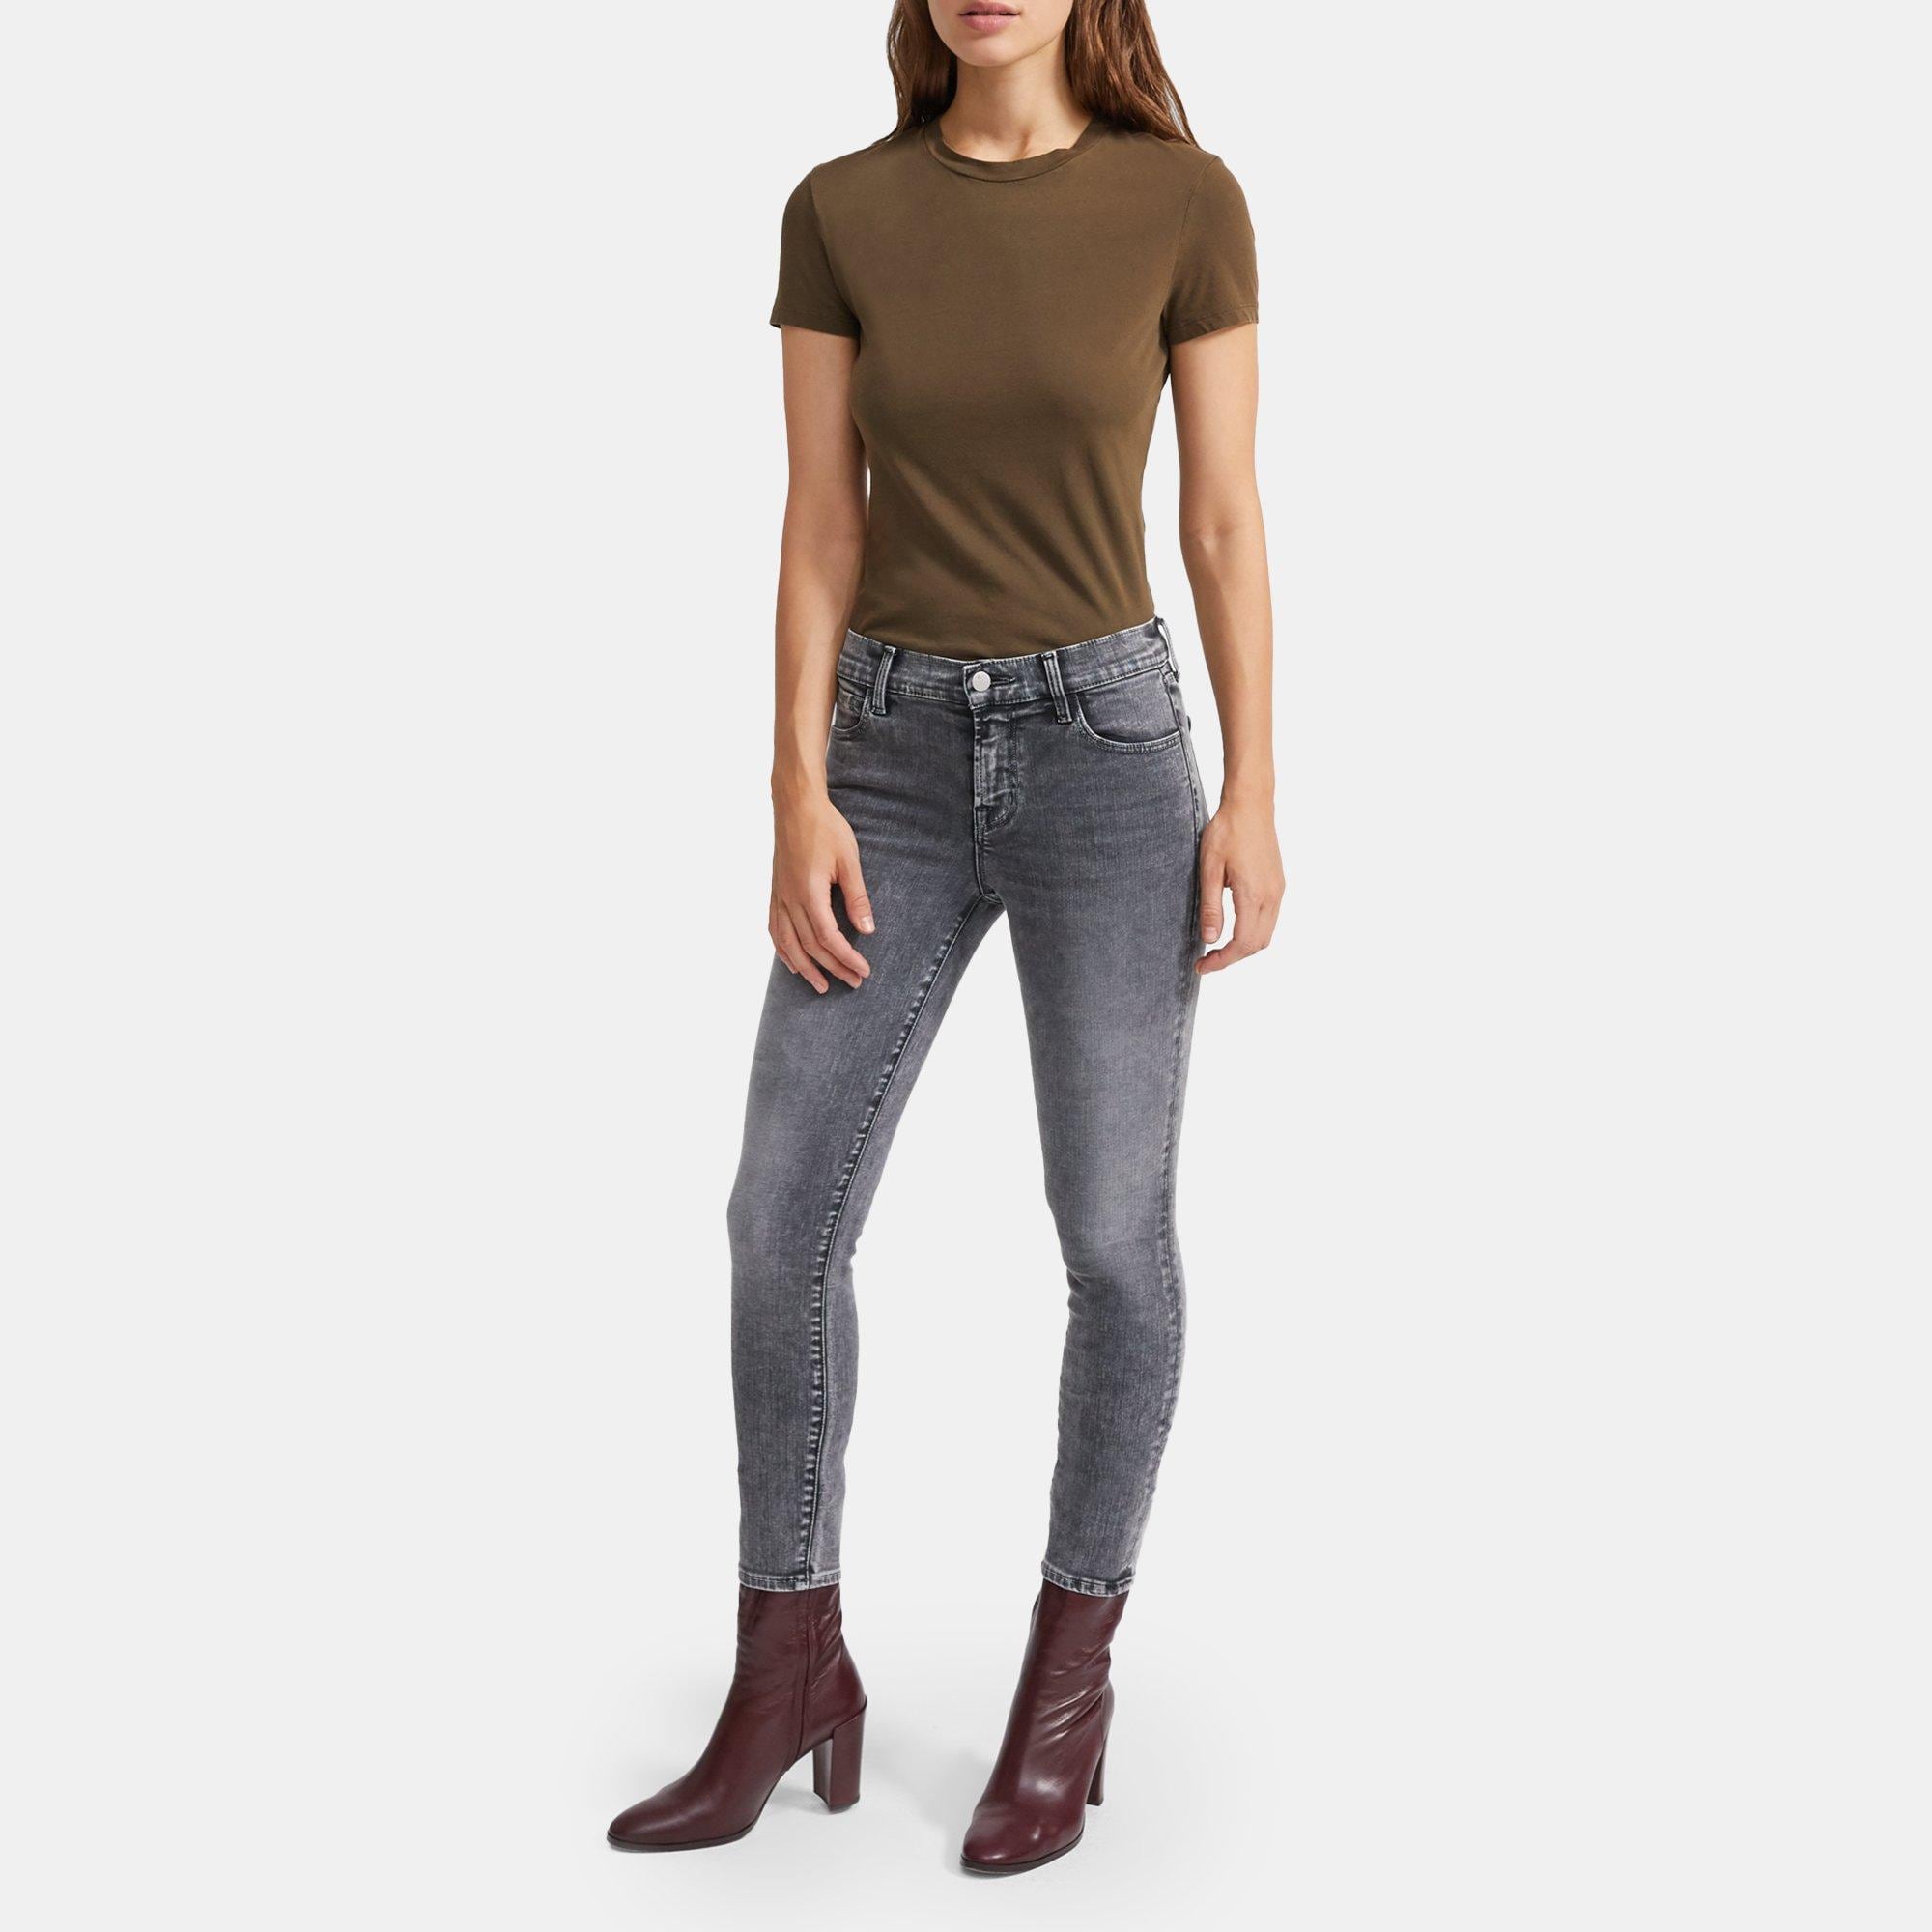 J Brand Women's Capri Mid Rise Jeans in Civil Size 26 - $33 - From